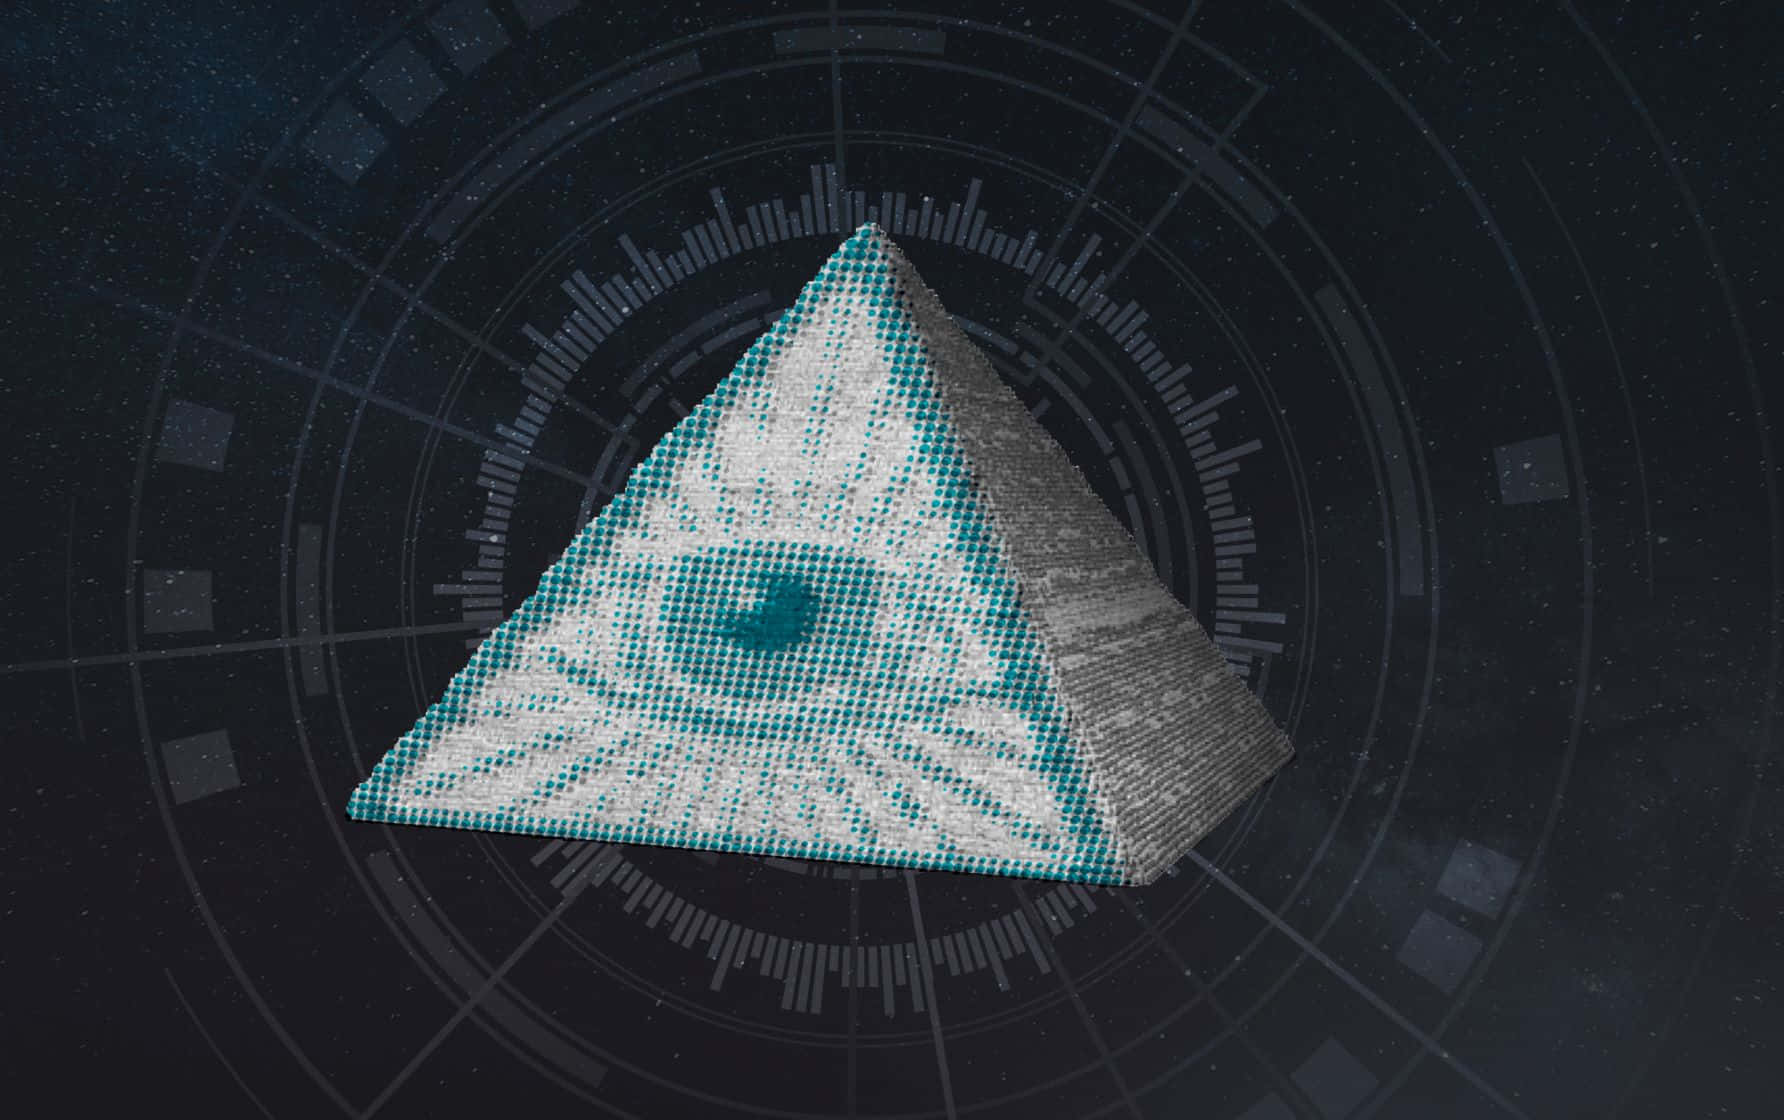 The all-seeing Eye of the Illuminati